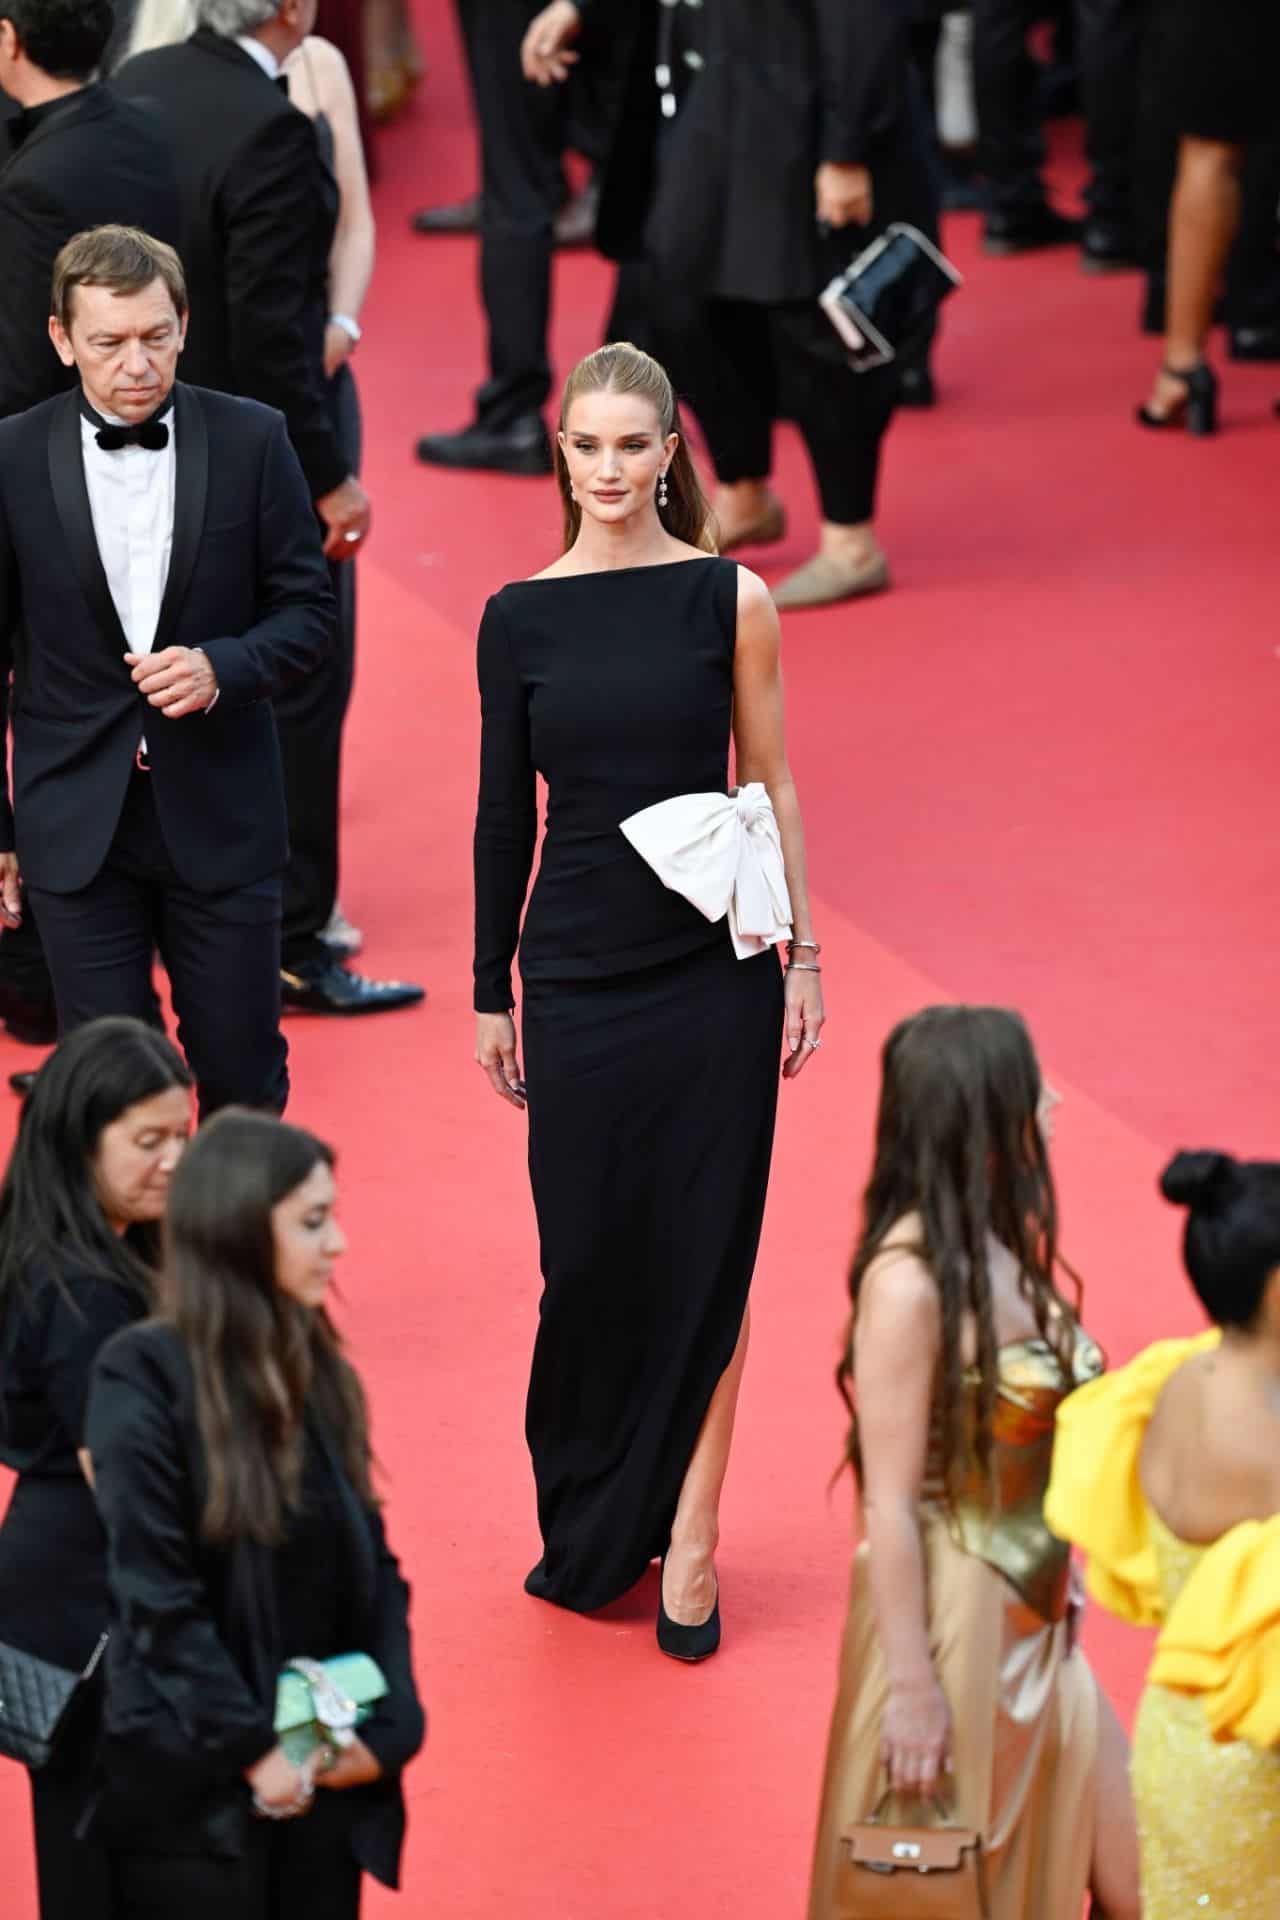 Rosie Huntington-Whiteley Brings Sleek Glamour to the Cannes Film Festival